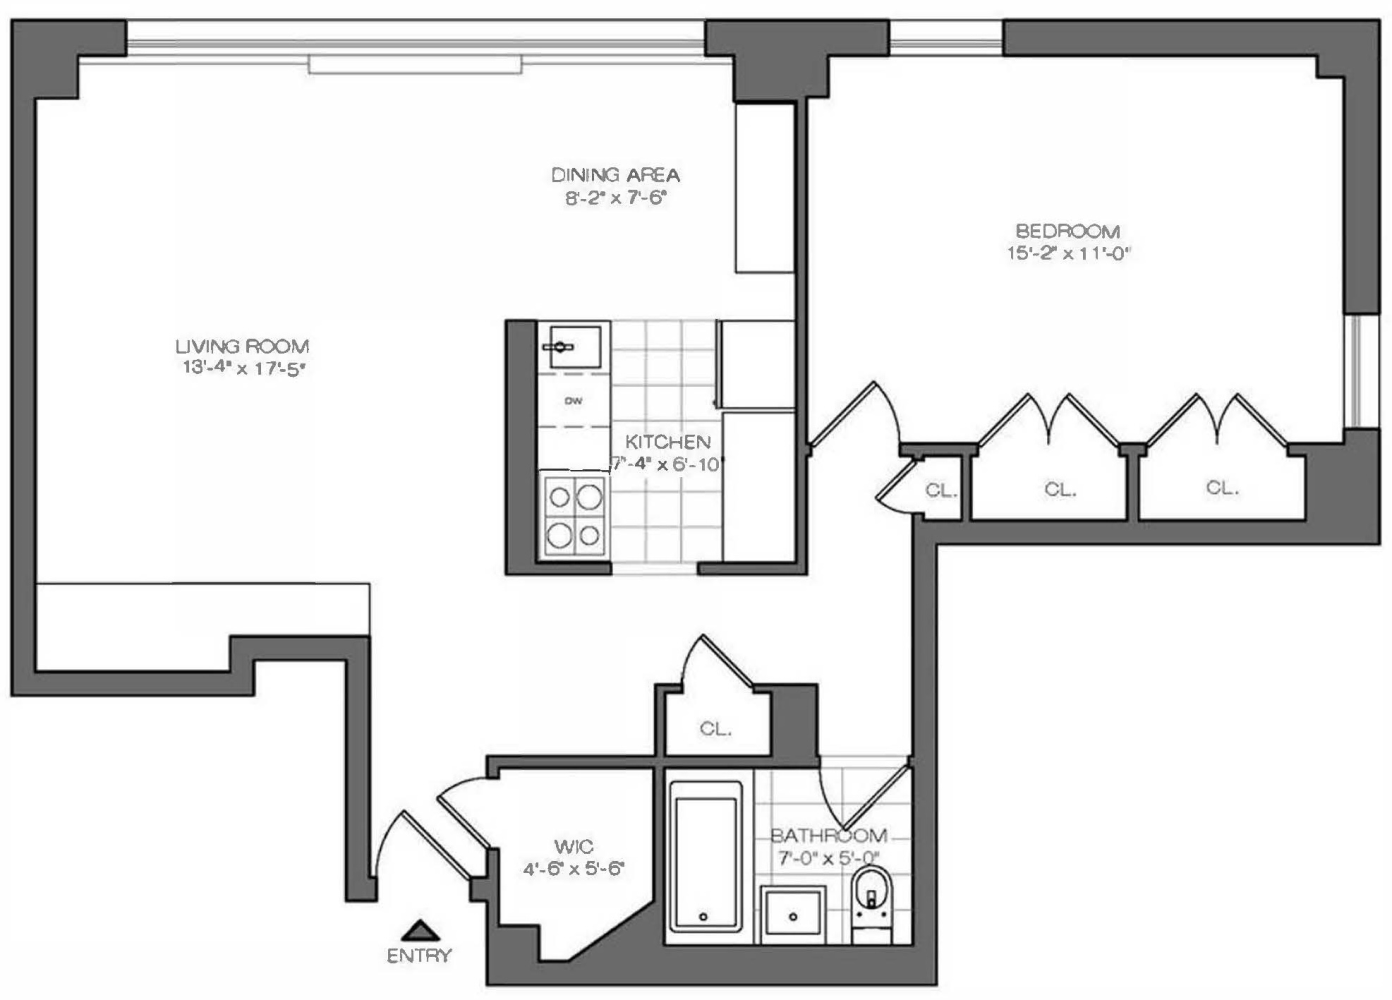 Floorplan for 115 Ashland Place, 8C